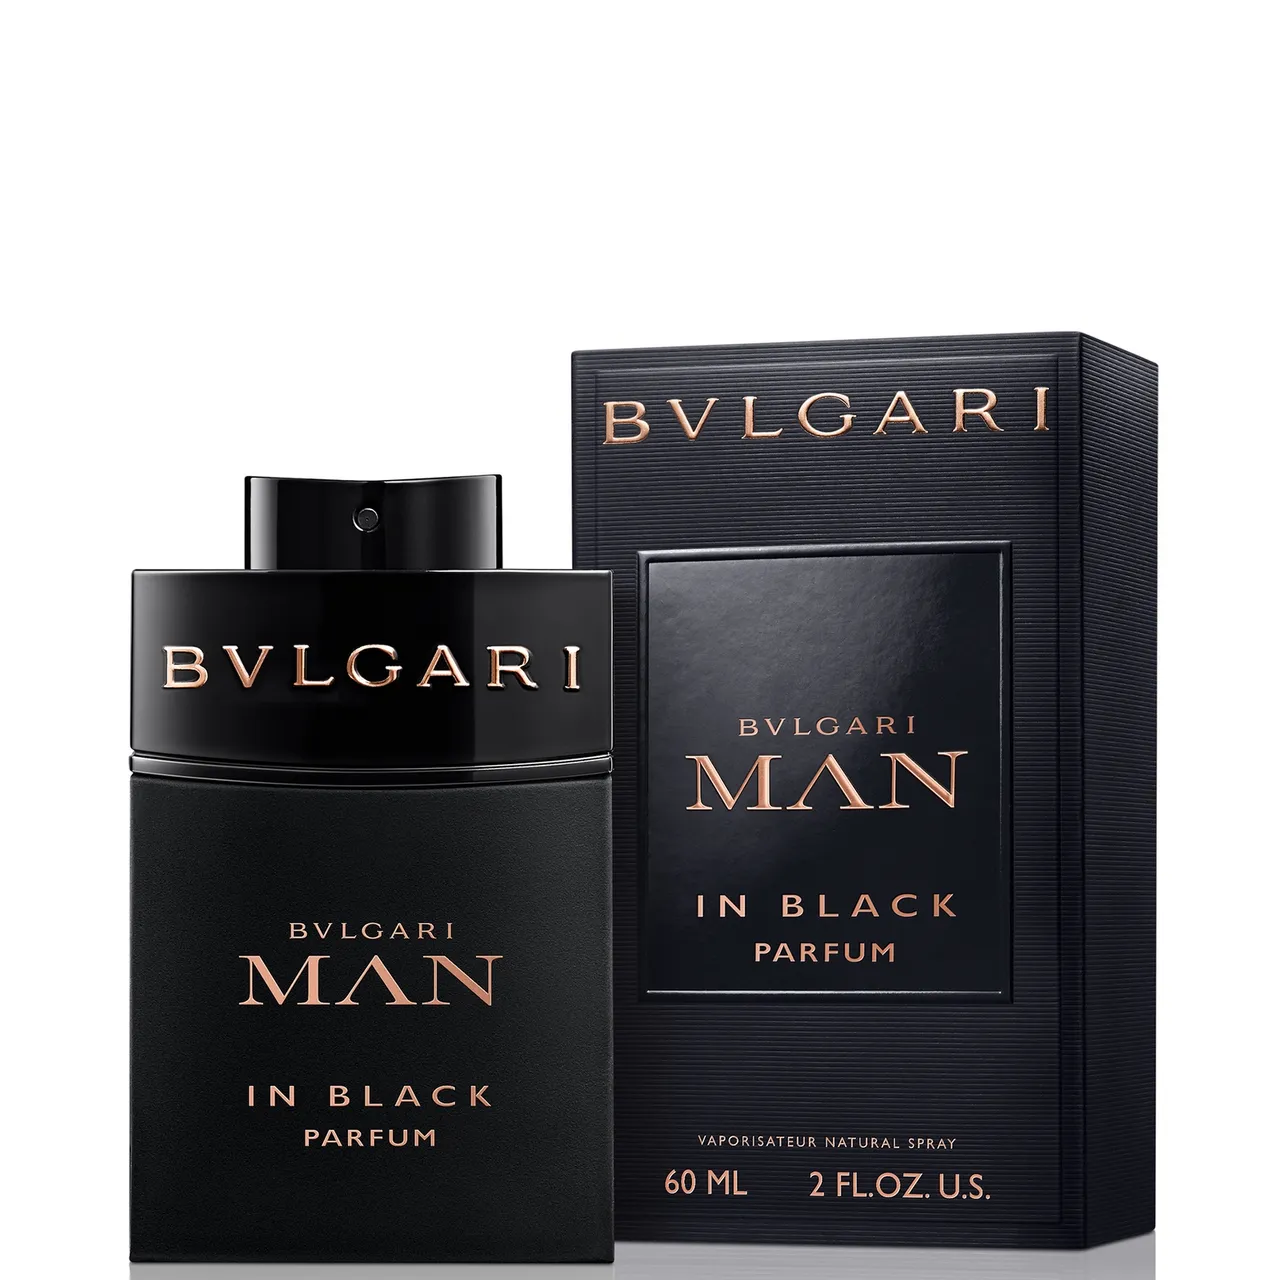 BVLGARI Man in Black Parfum 60ml